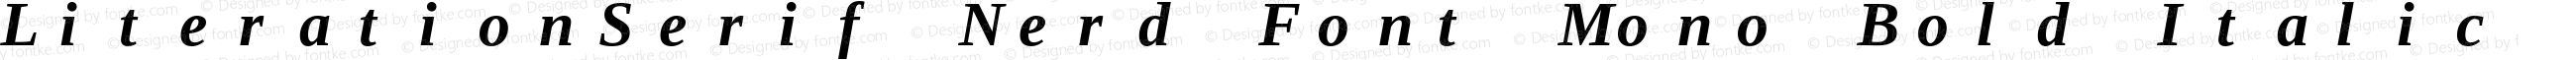 Literation Serif Bold Italic Nerd Font Complete Mono